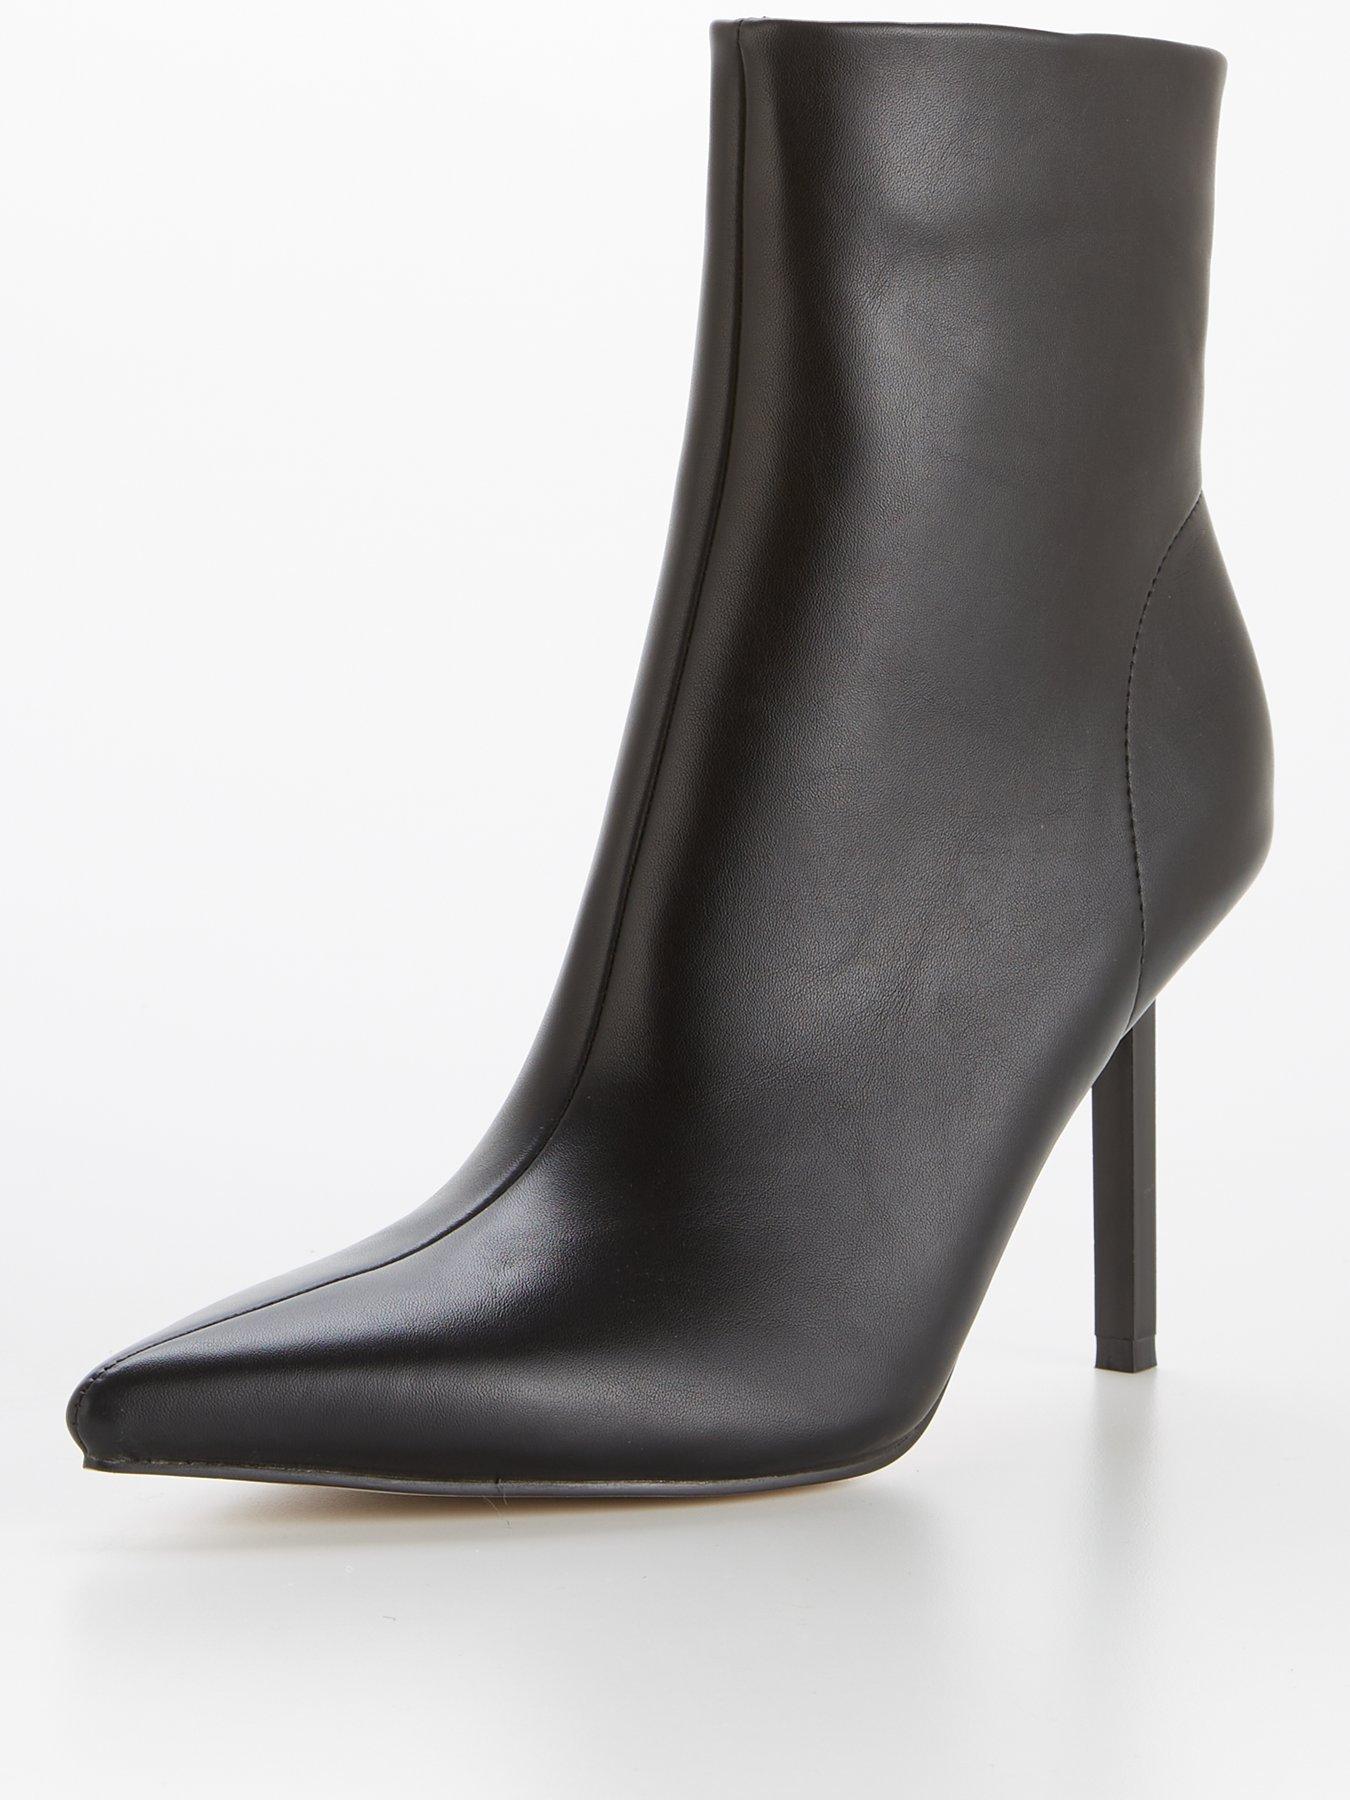 Raid Tamyra Stiletto Heel Pointed Toe Ankle Boot - Black | very.co.uk